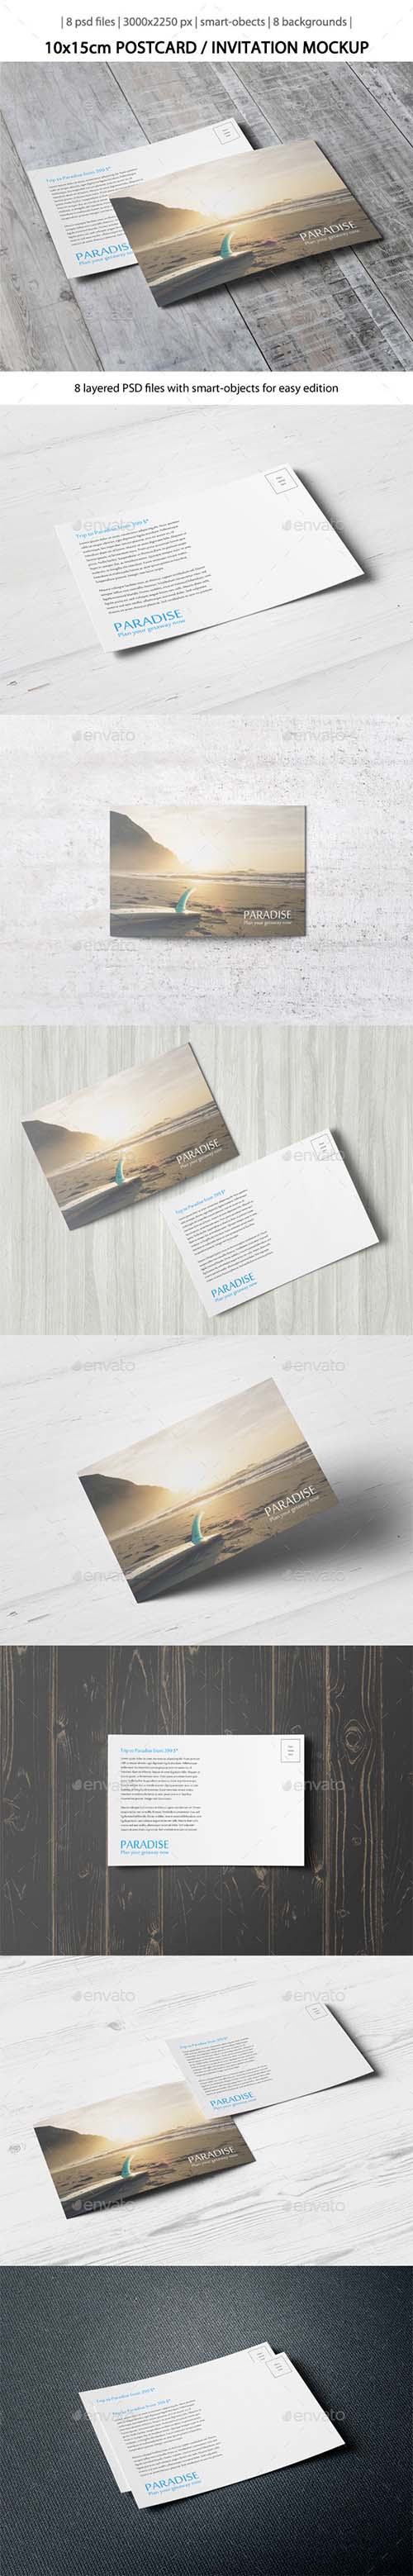 GraphicRiver: Postcard / Invitation Mock-Up [10x15cm] 10799810